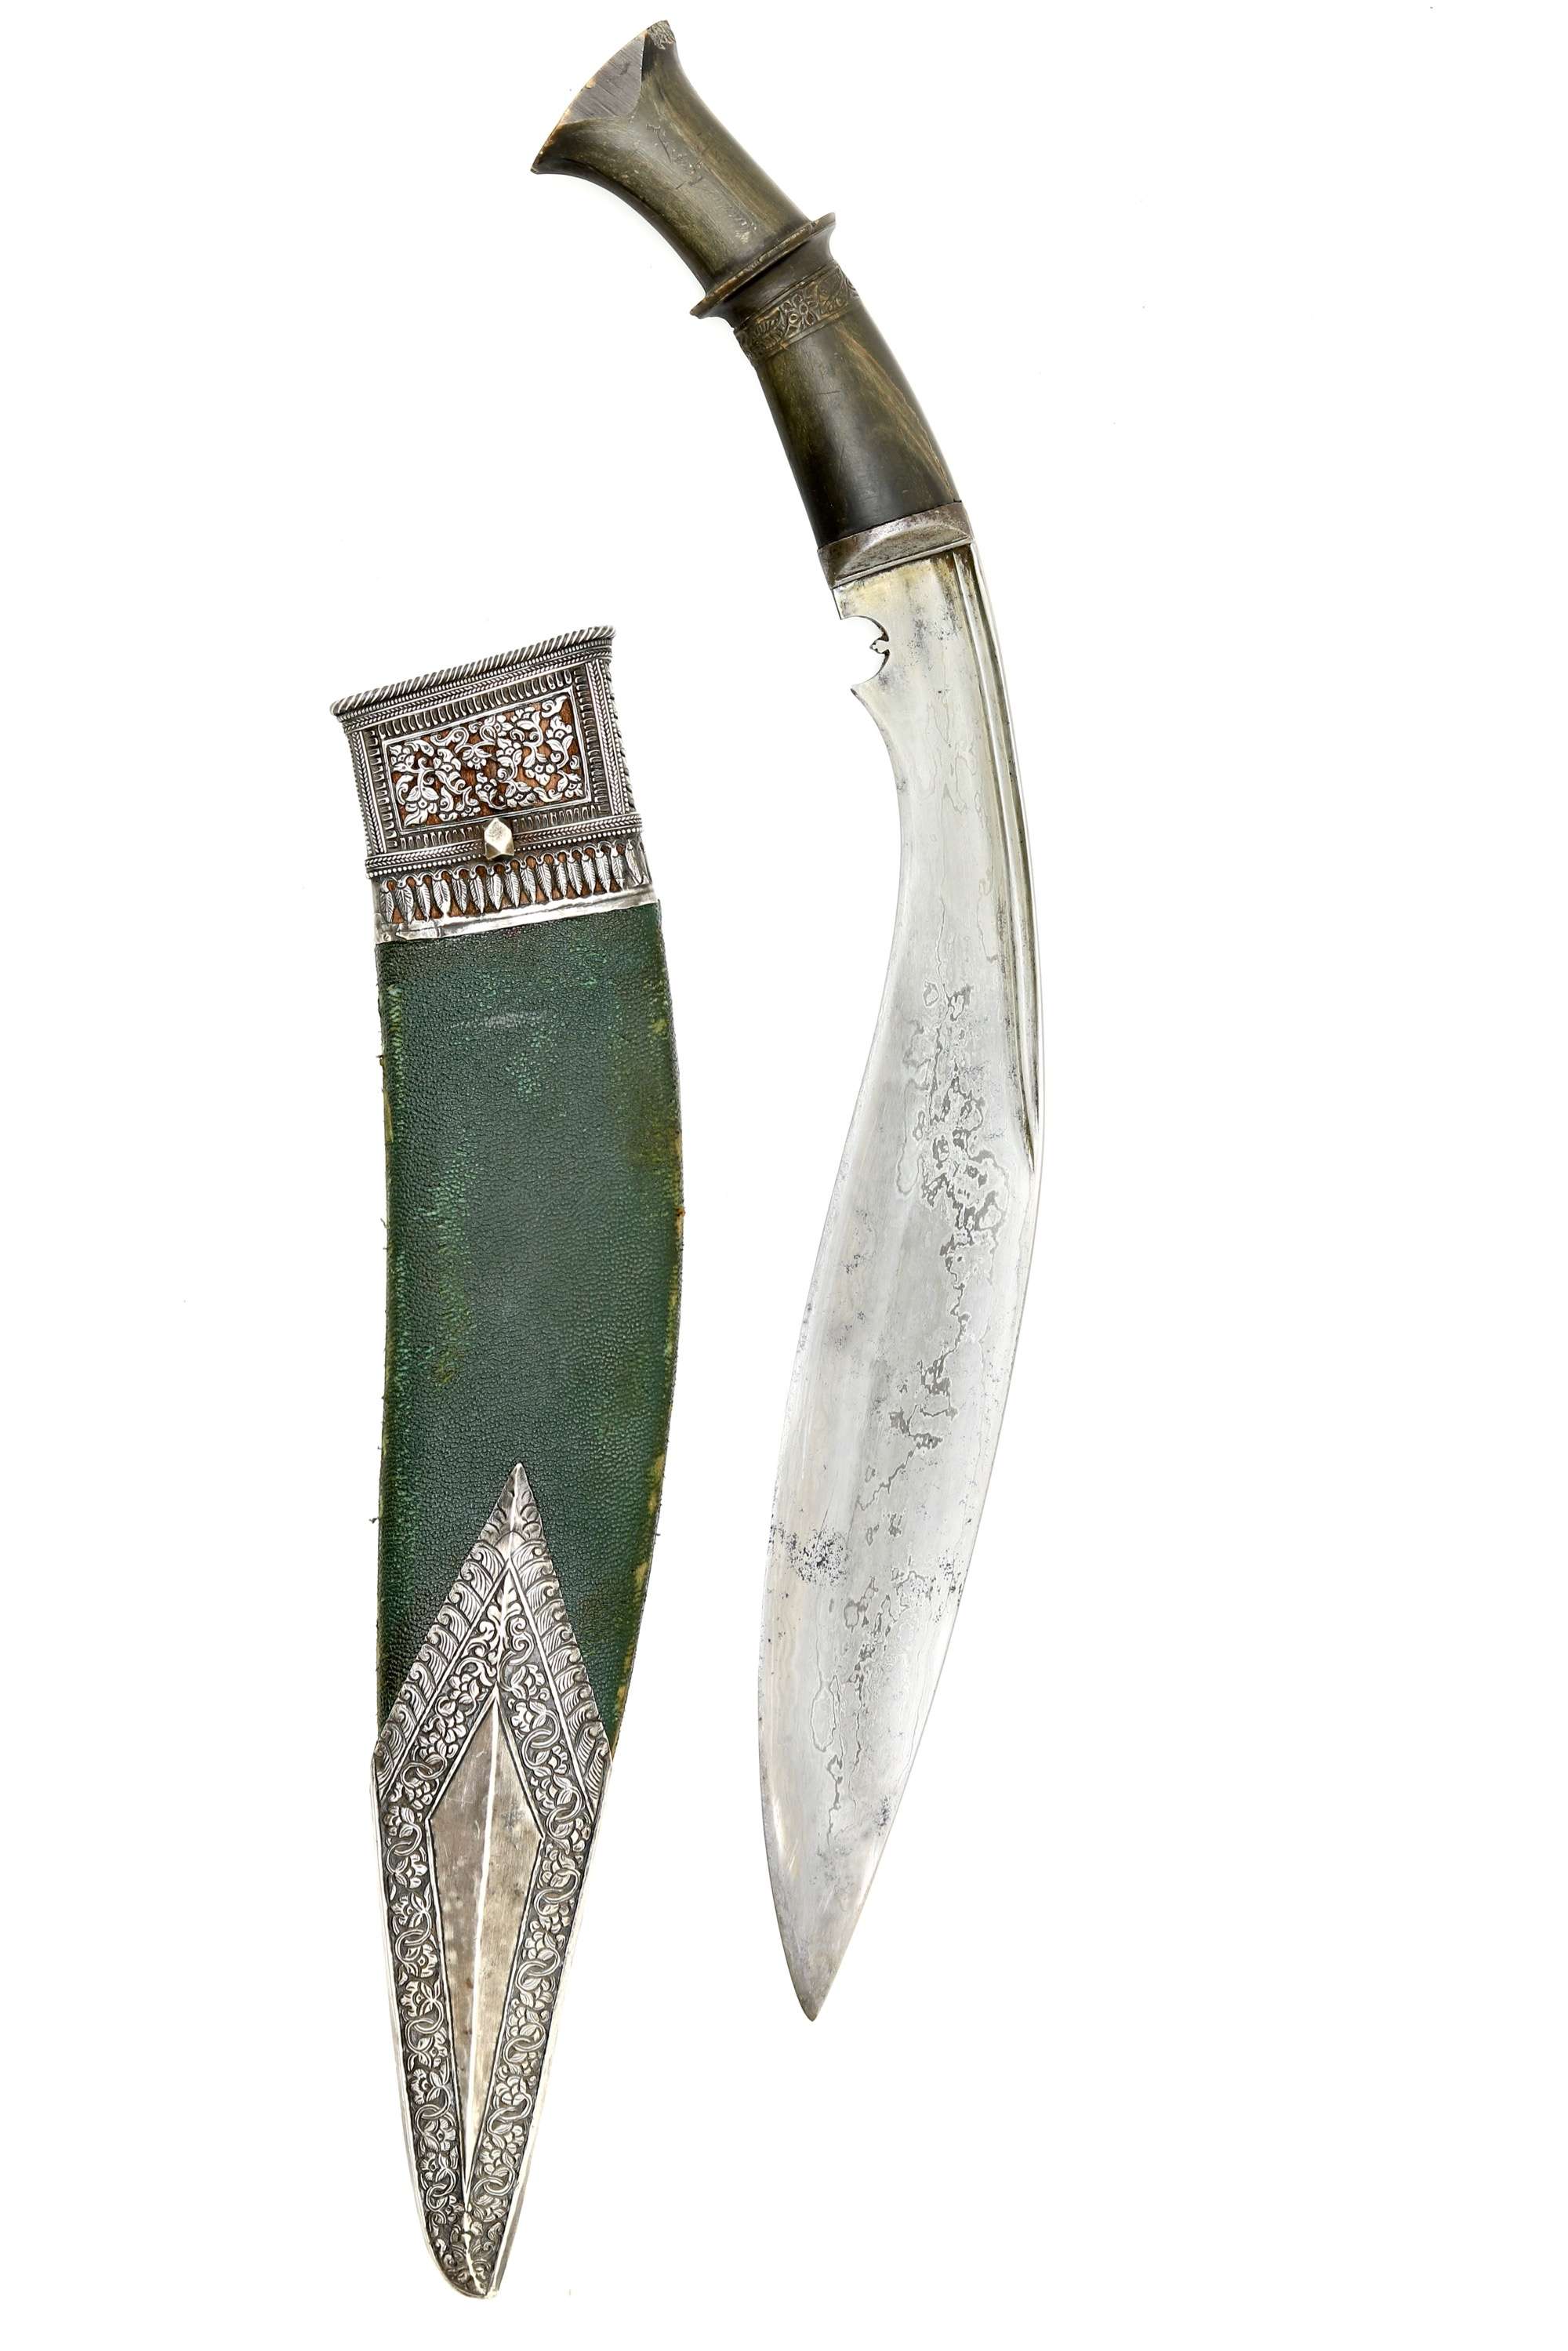 19th century silver mounted khukuki